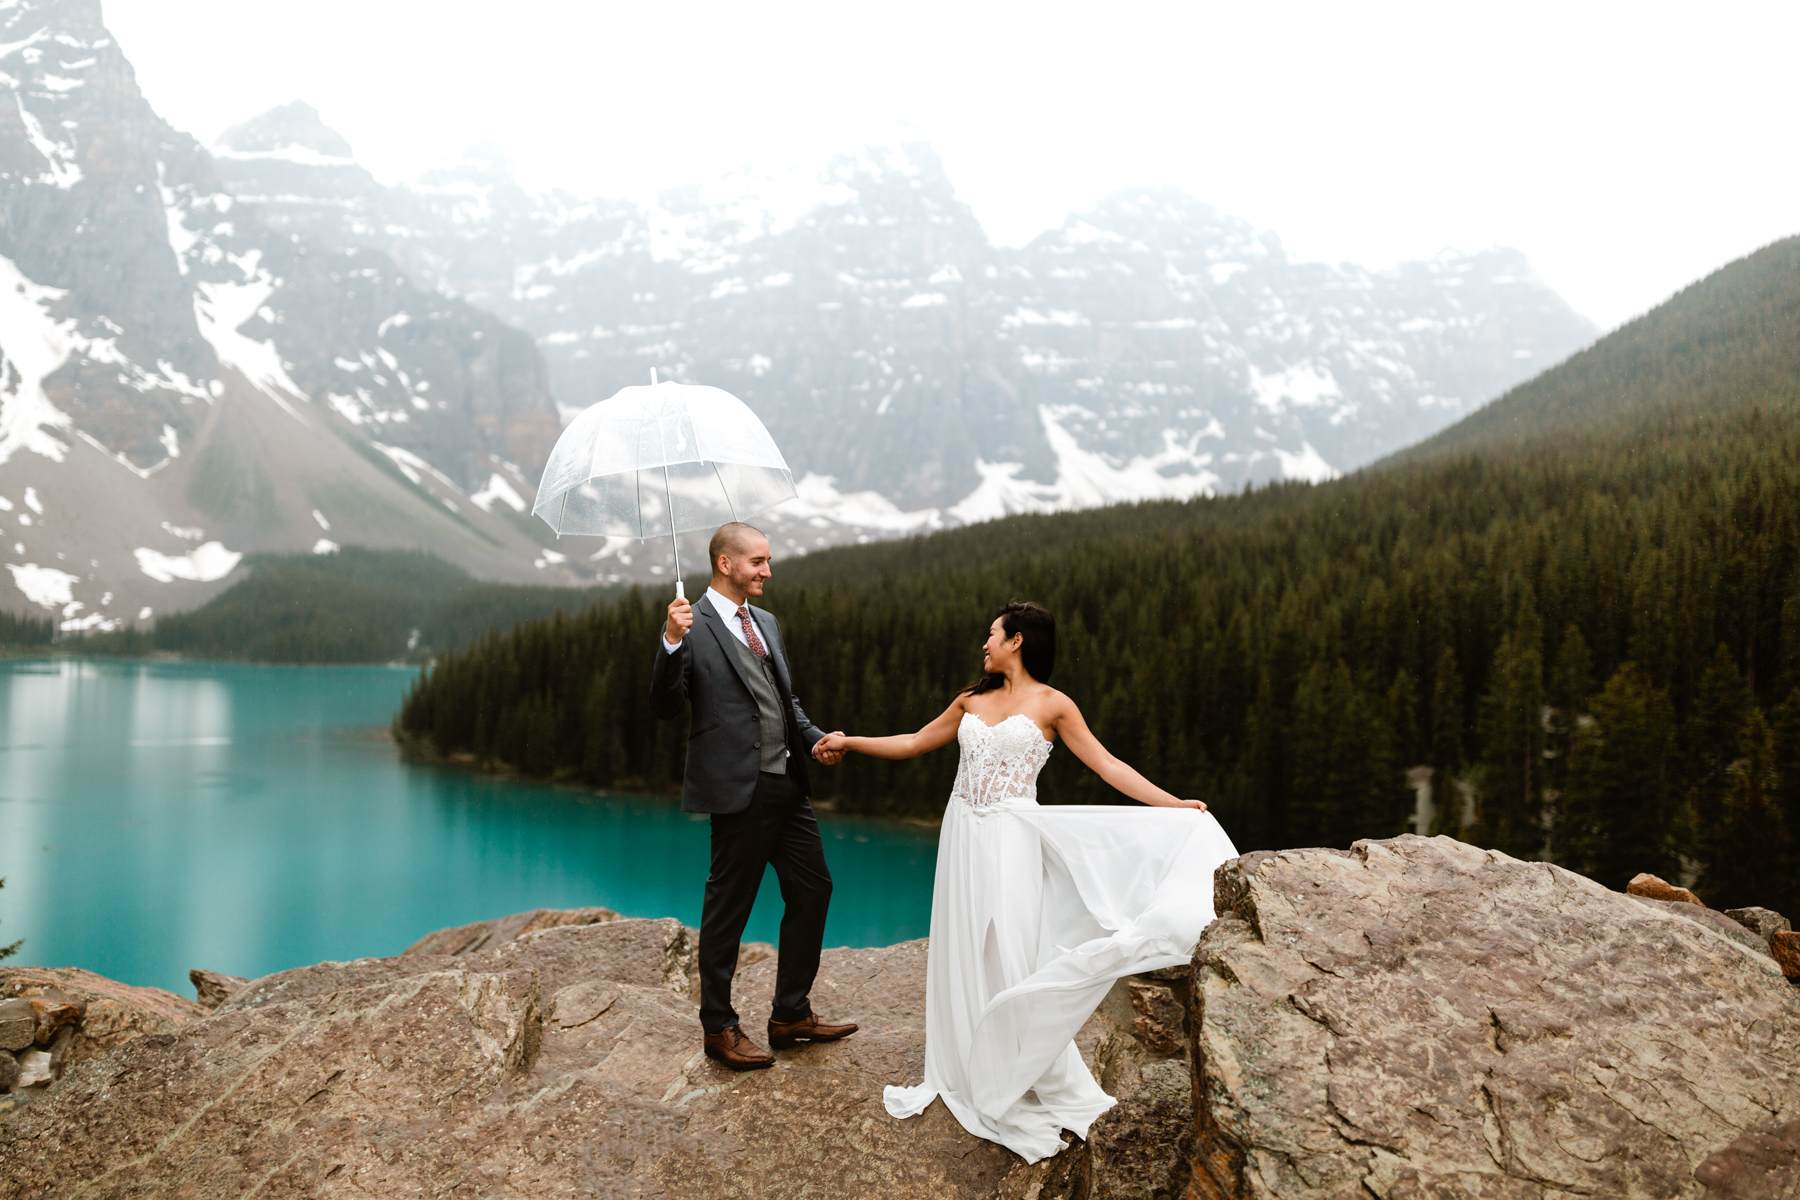 Intimate Wedding Photographers in Banff National Park - Photo 23